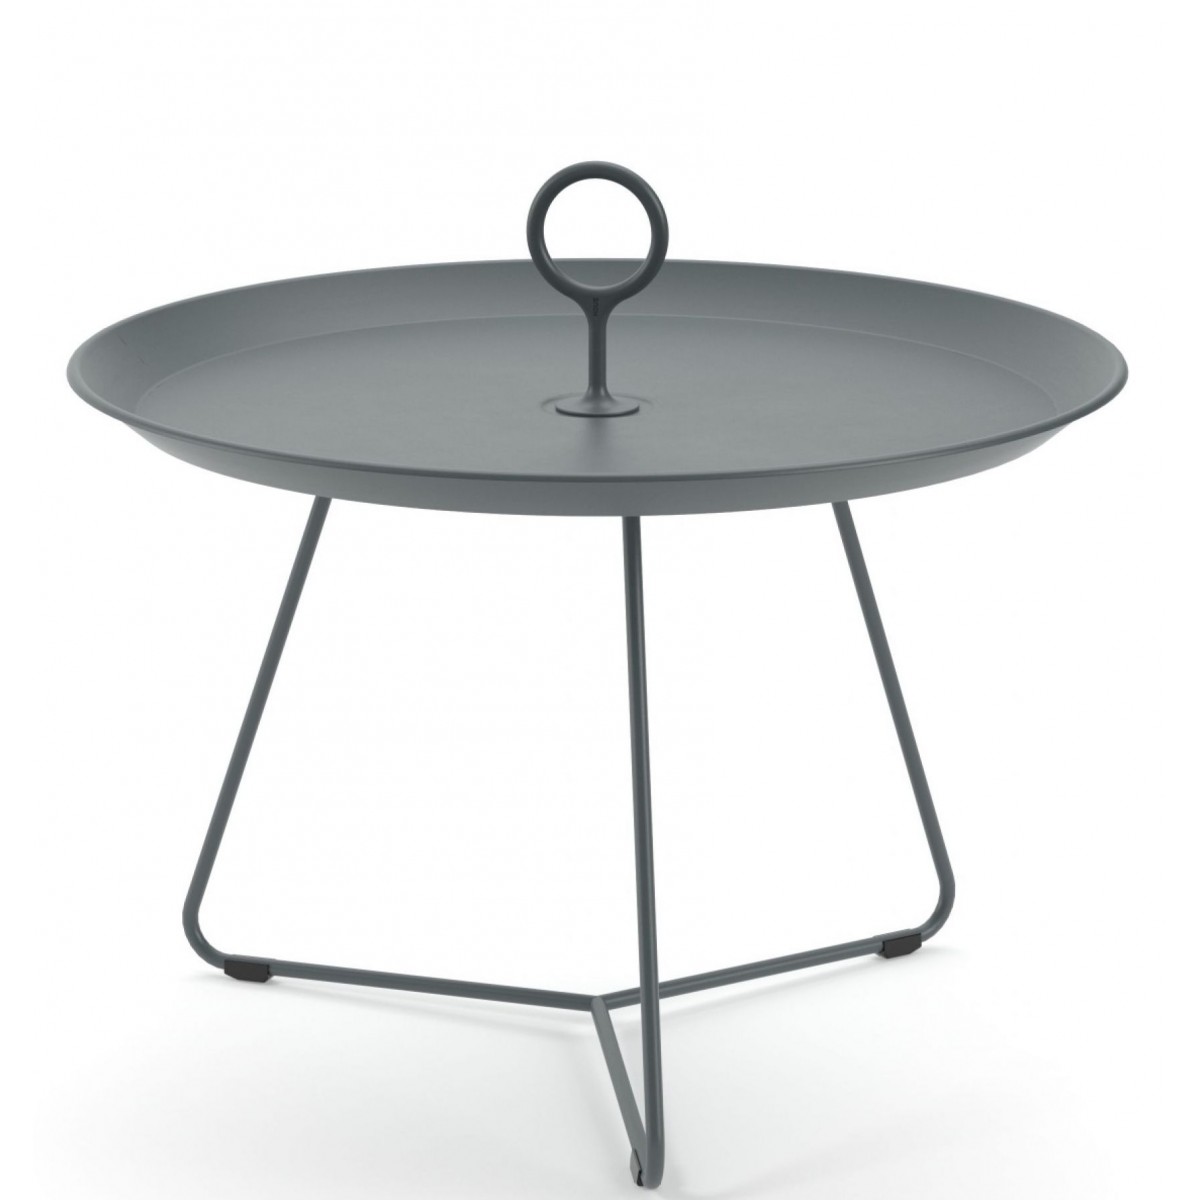 Dark grey - Ø58 cm - Eyelet table